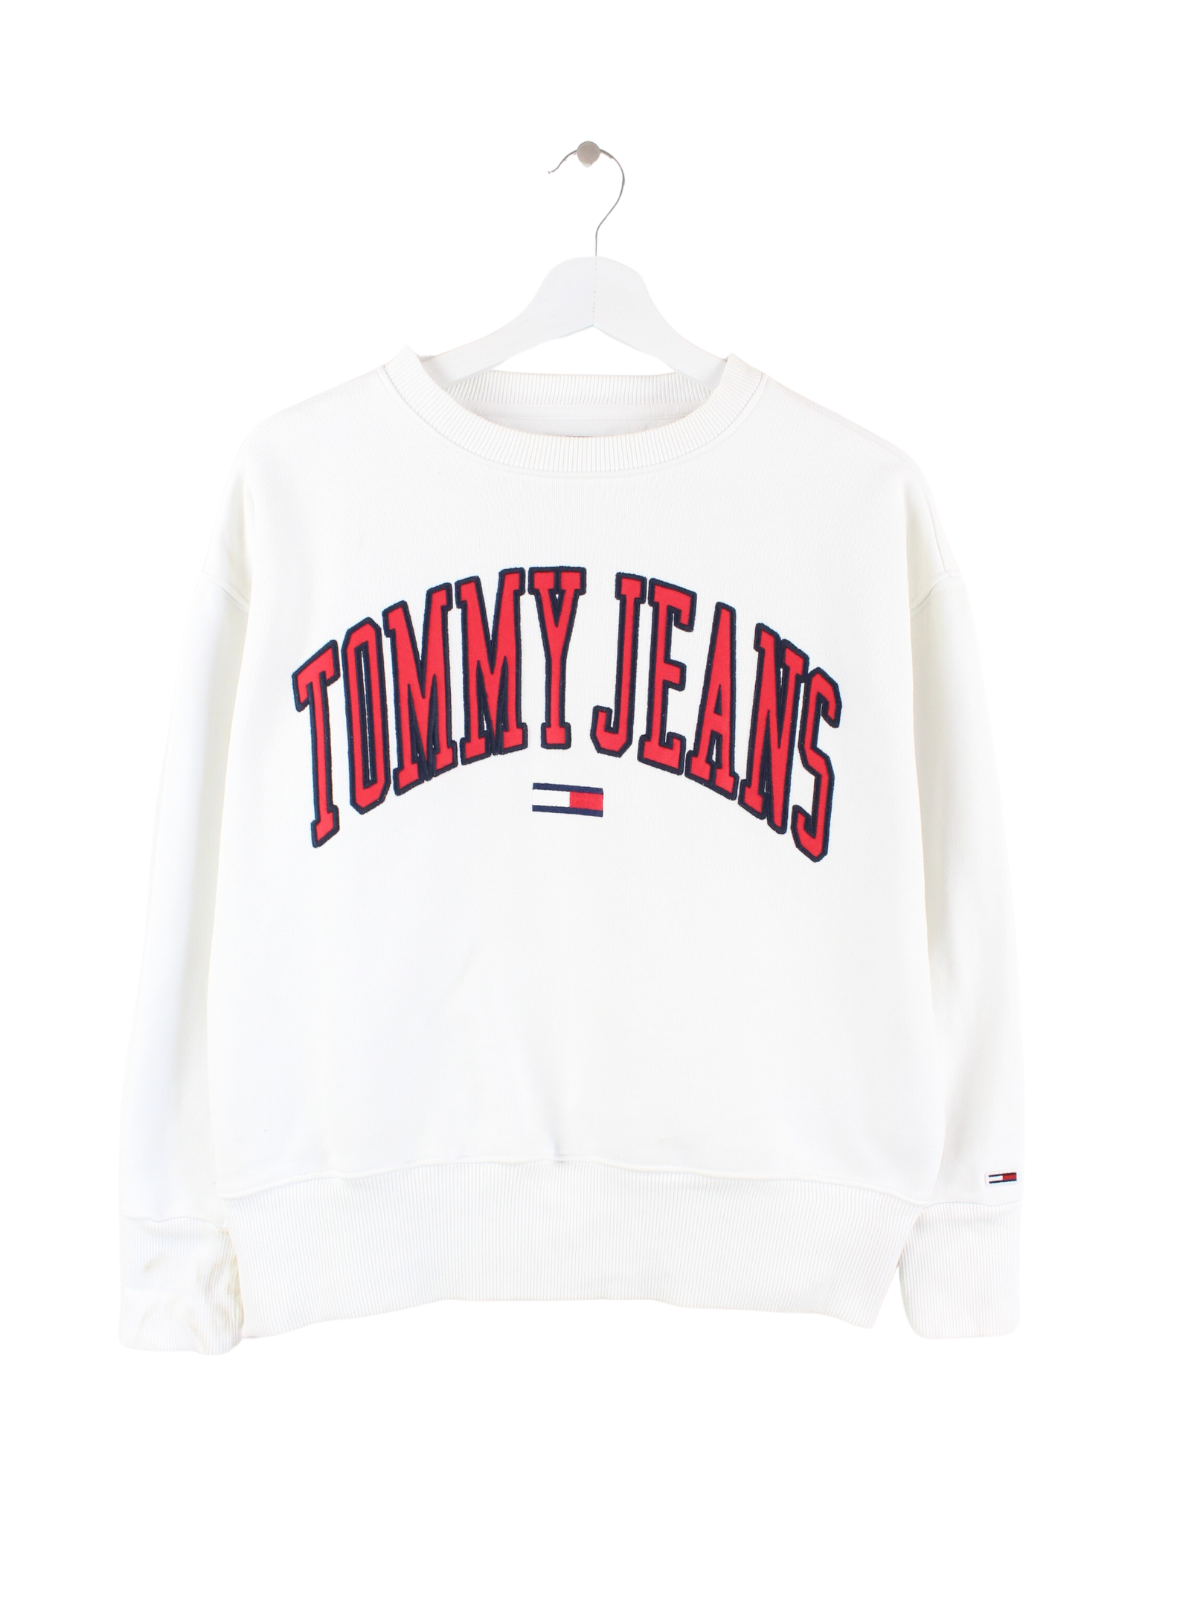 Tommy Hilfiger Women's Sweater White XS